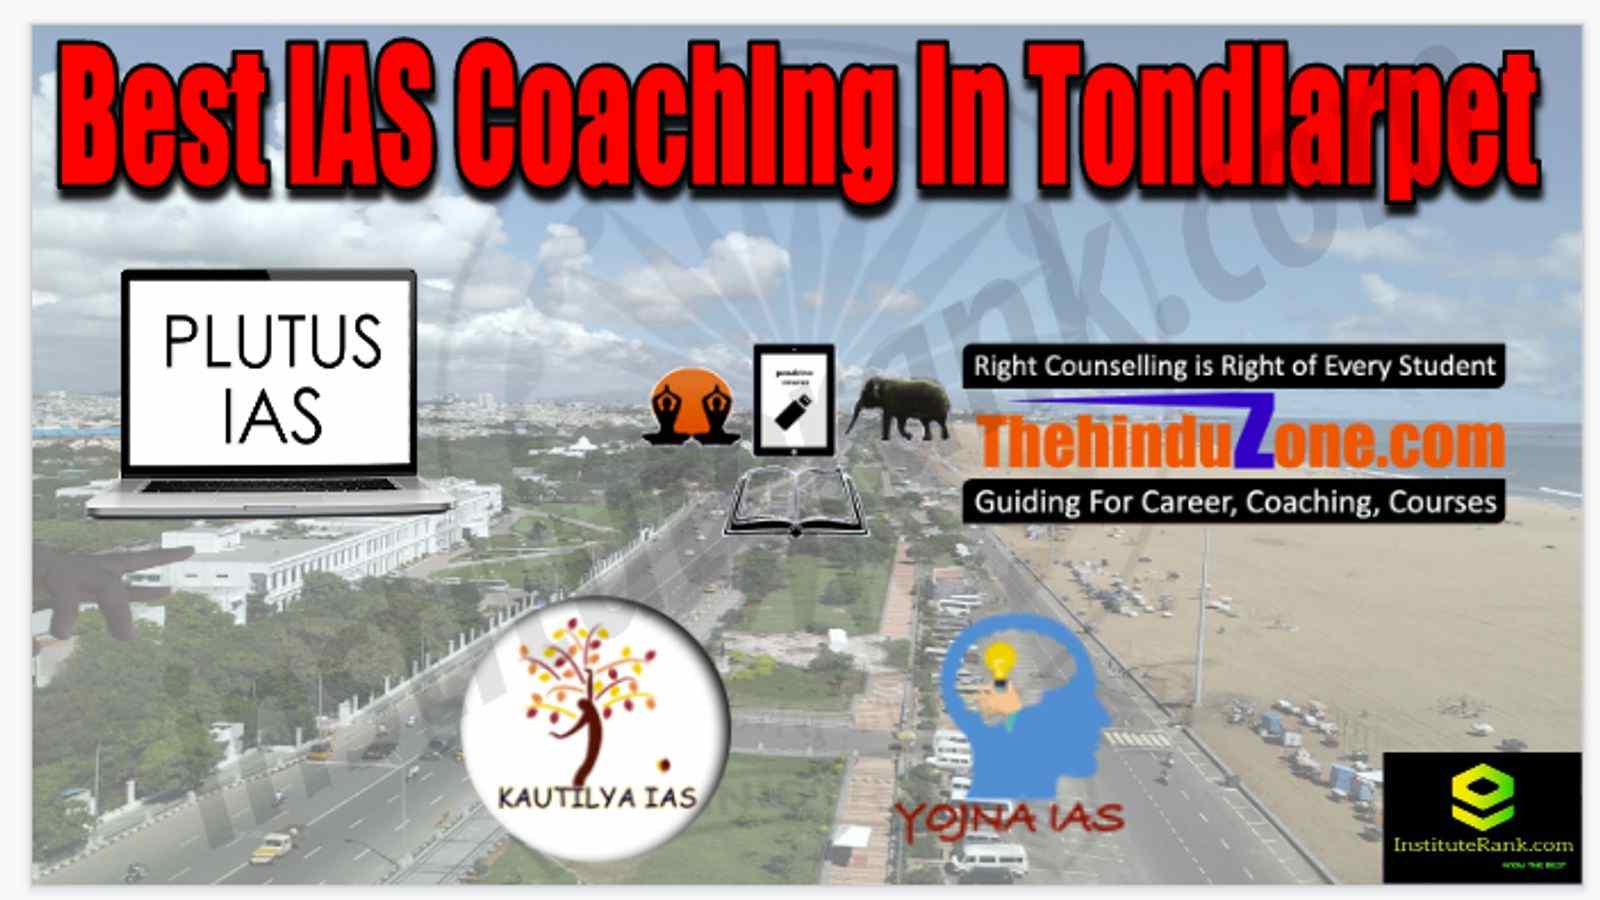 Best IAS Coaching in Tondiarpet